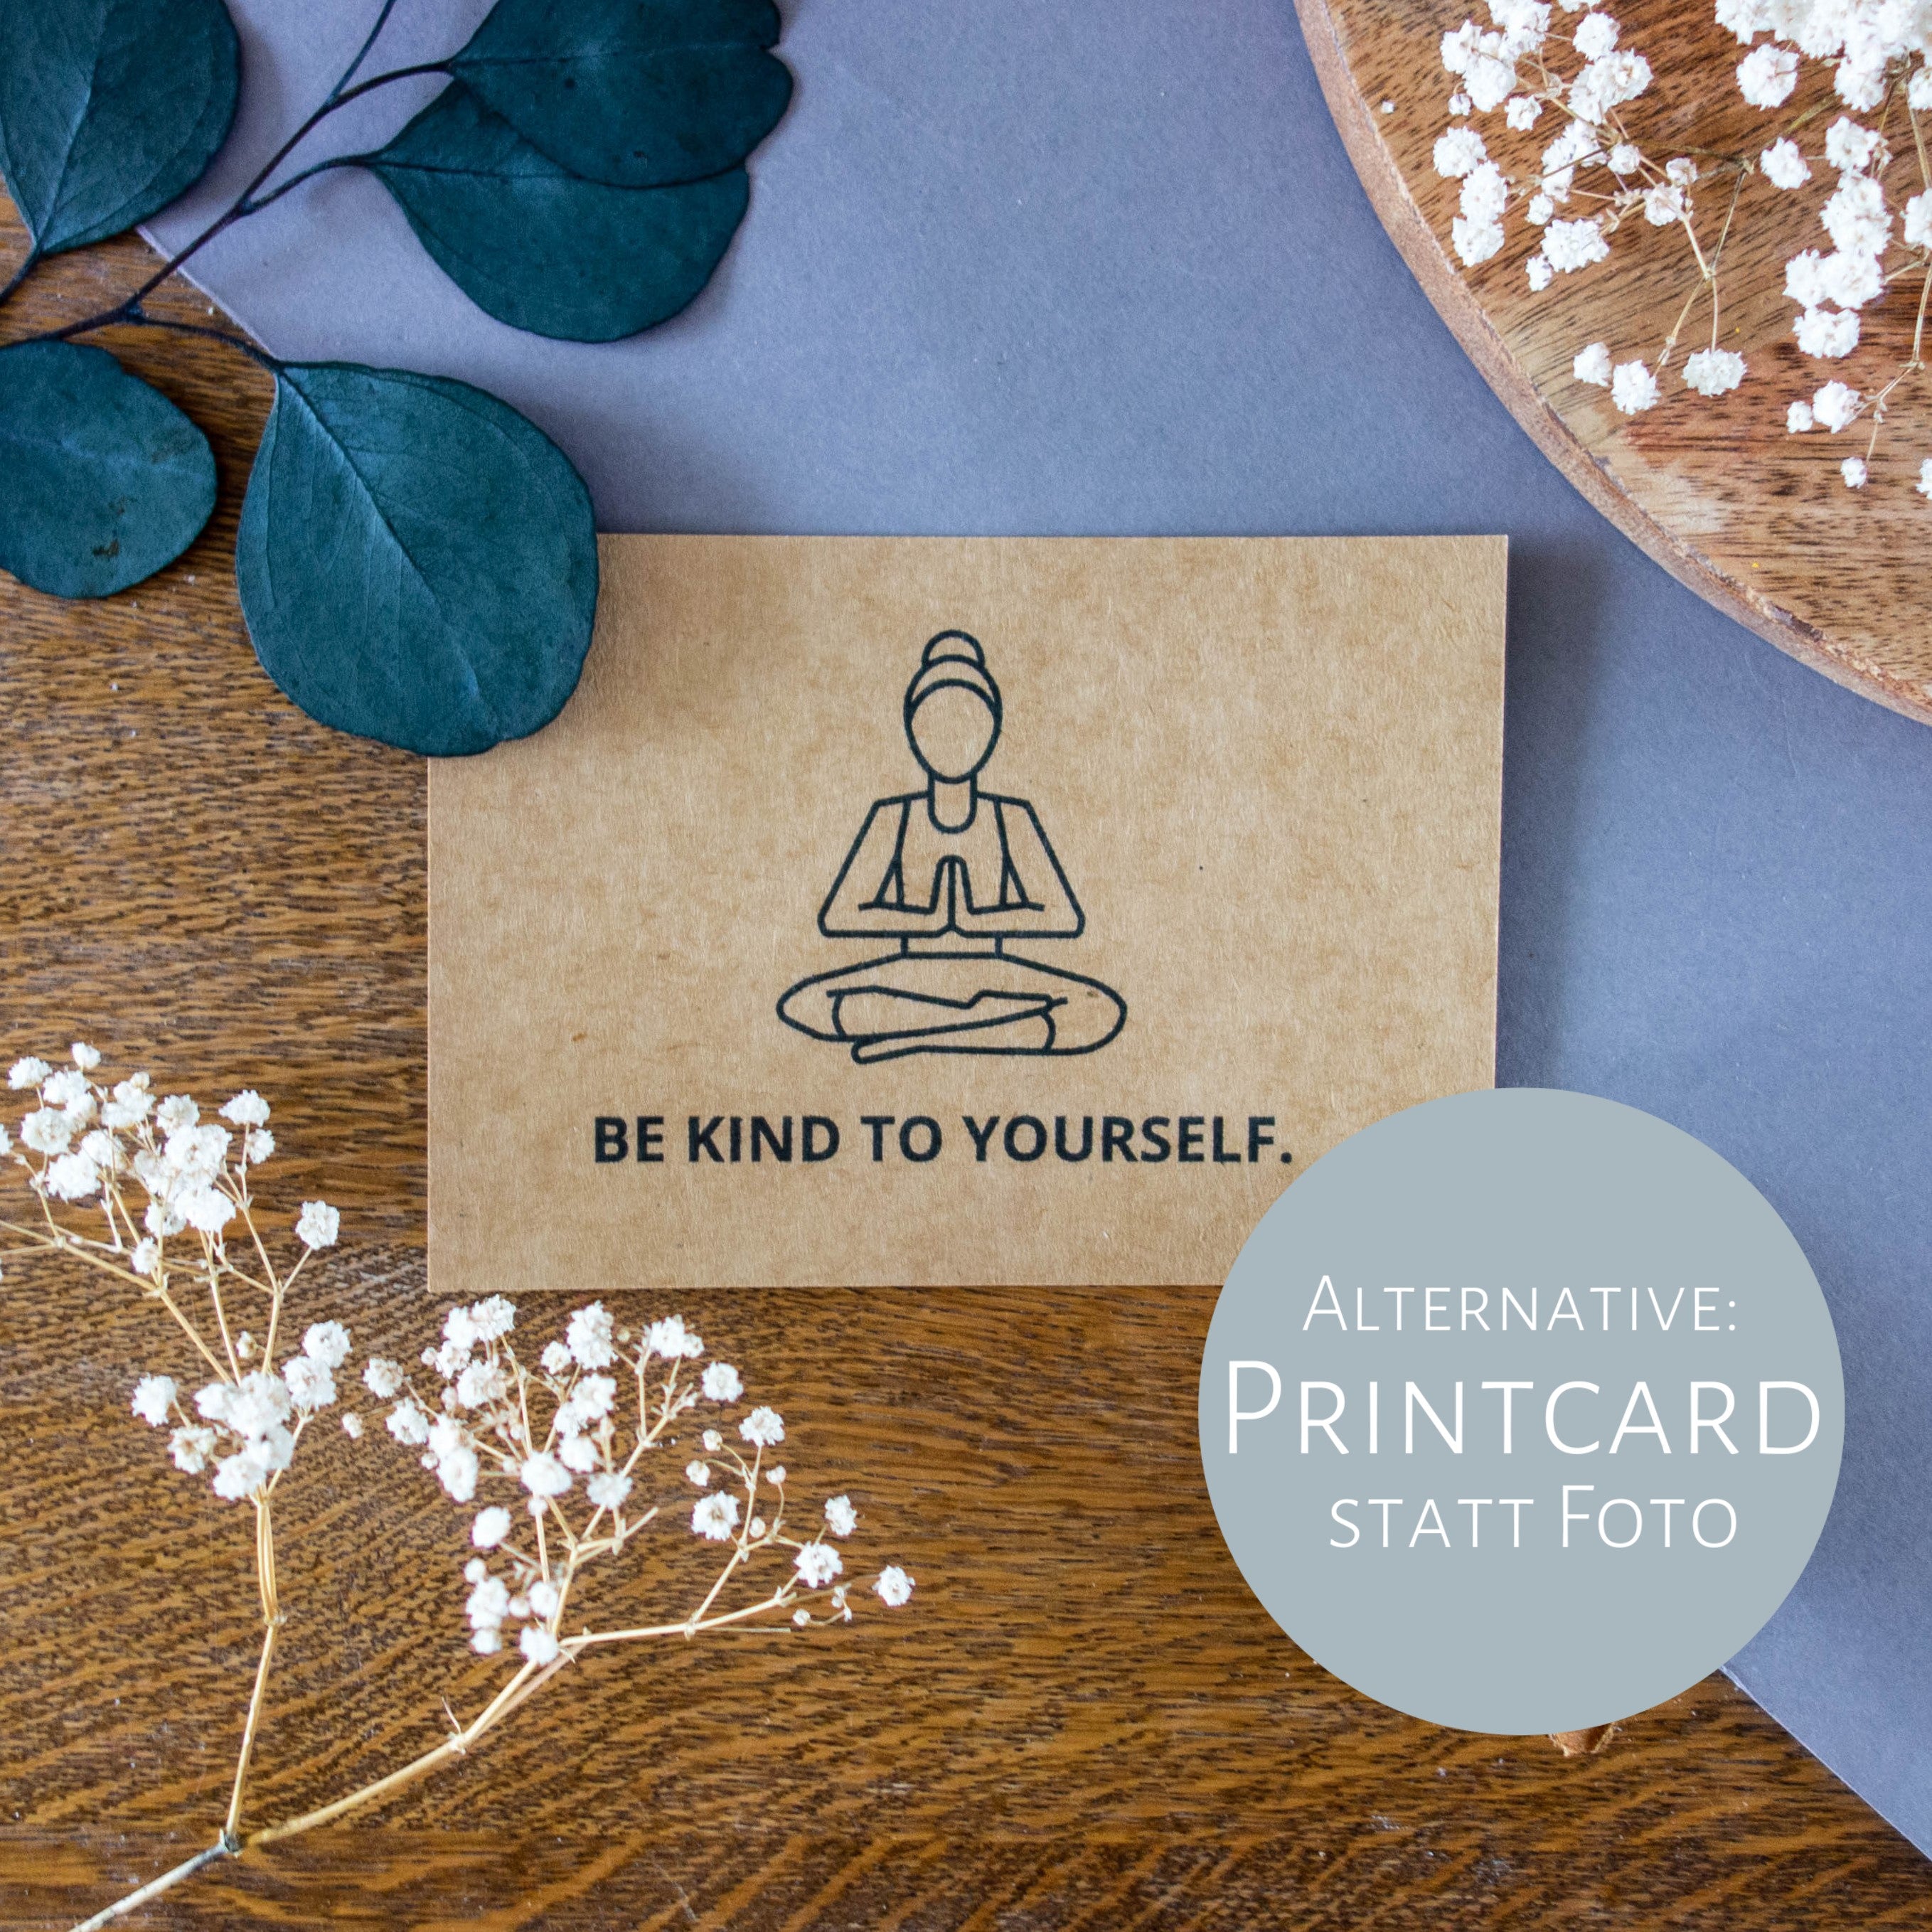 Printcard "Be kind to yourself" aus Kraftpapier.